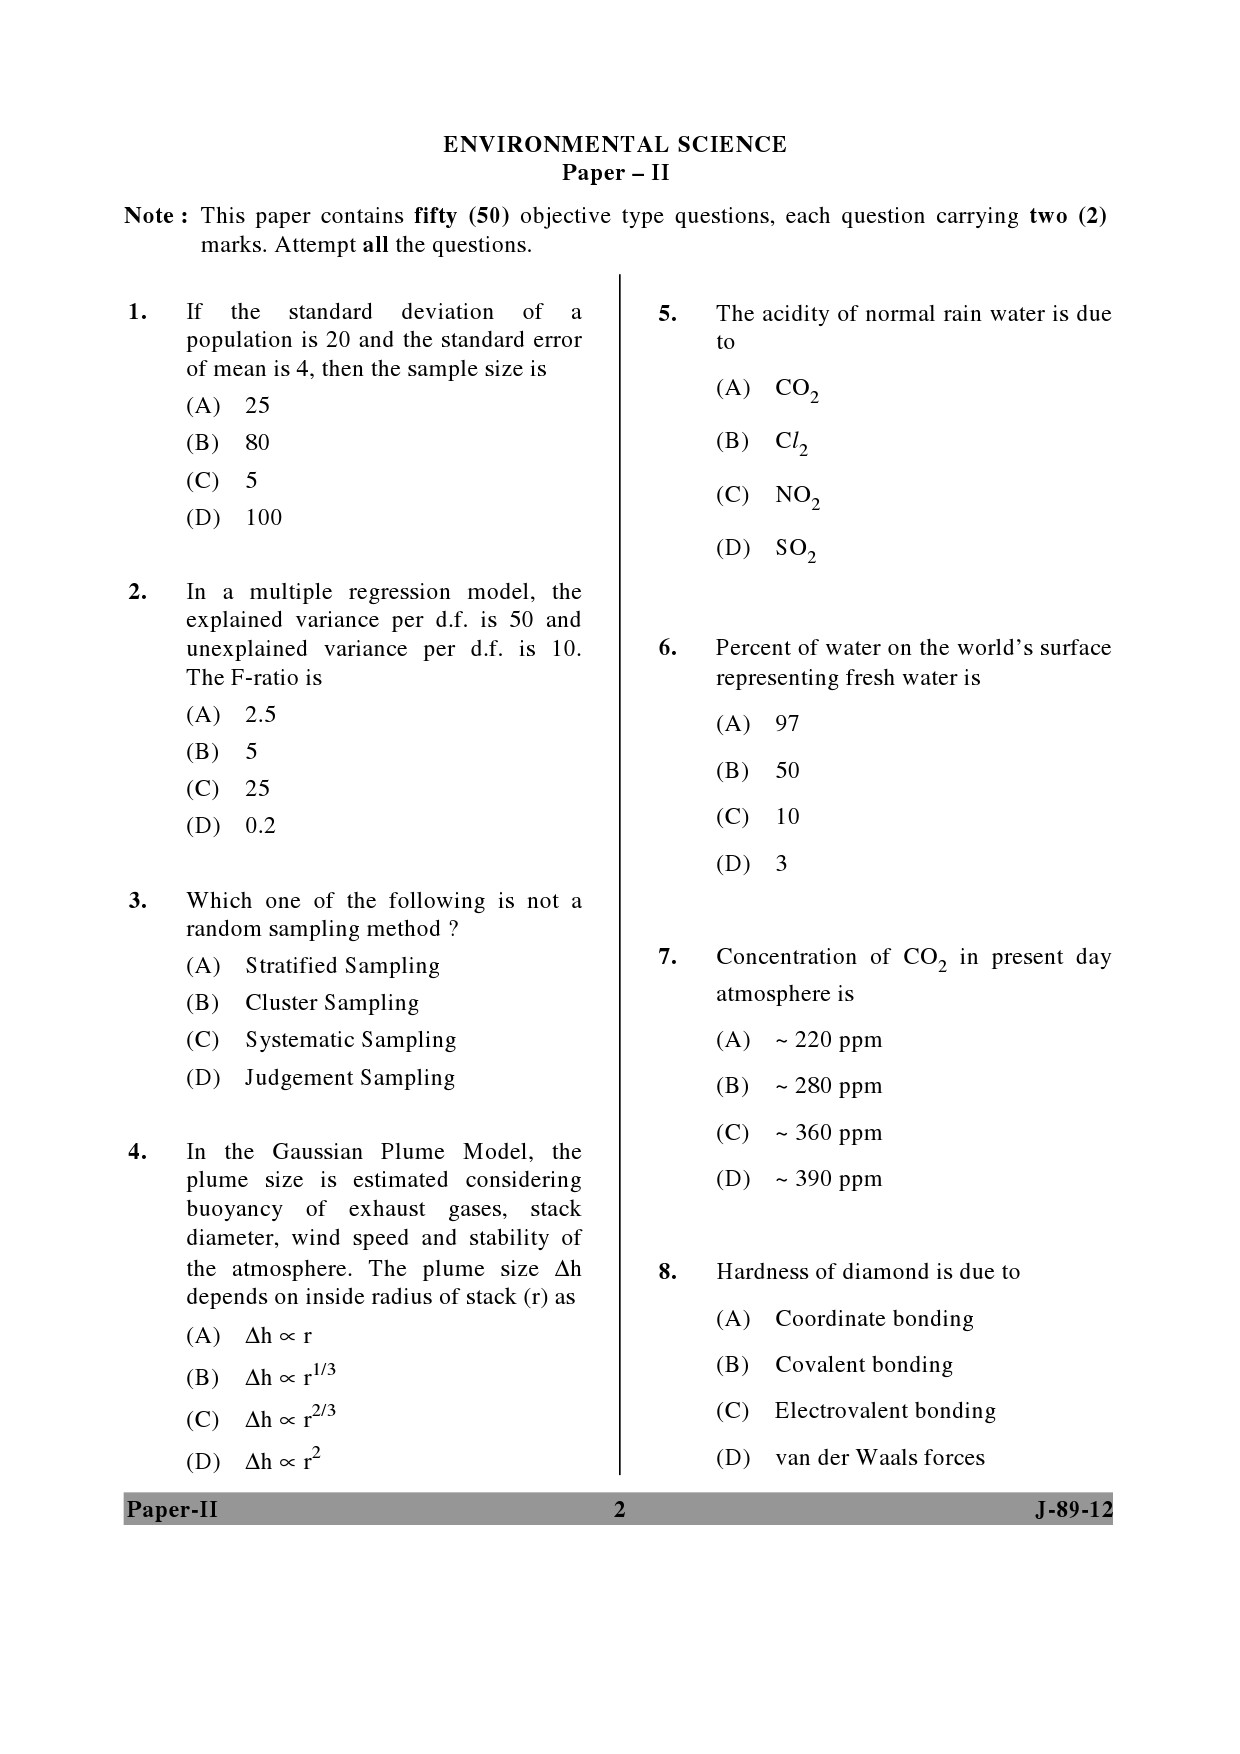 UGC NET Environmental Science Question Paper II June 2012 2